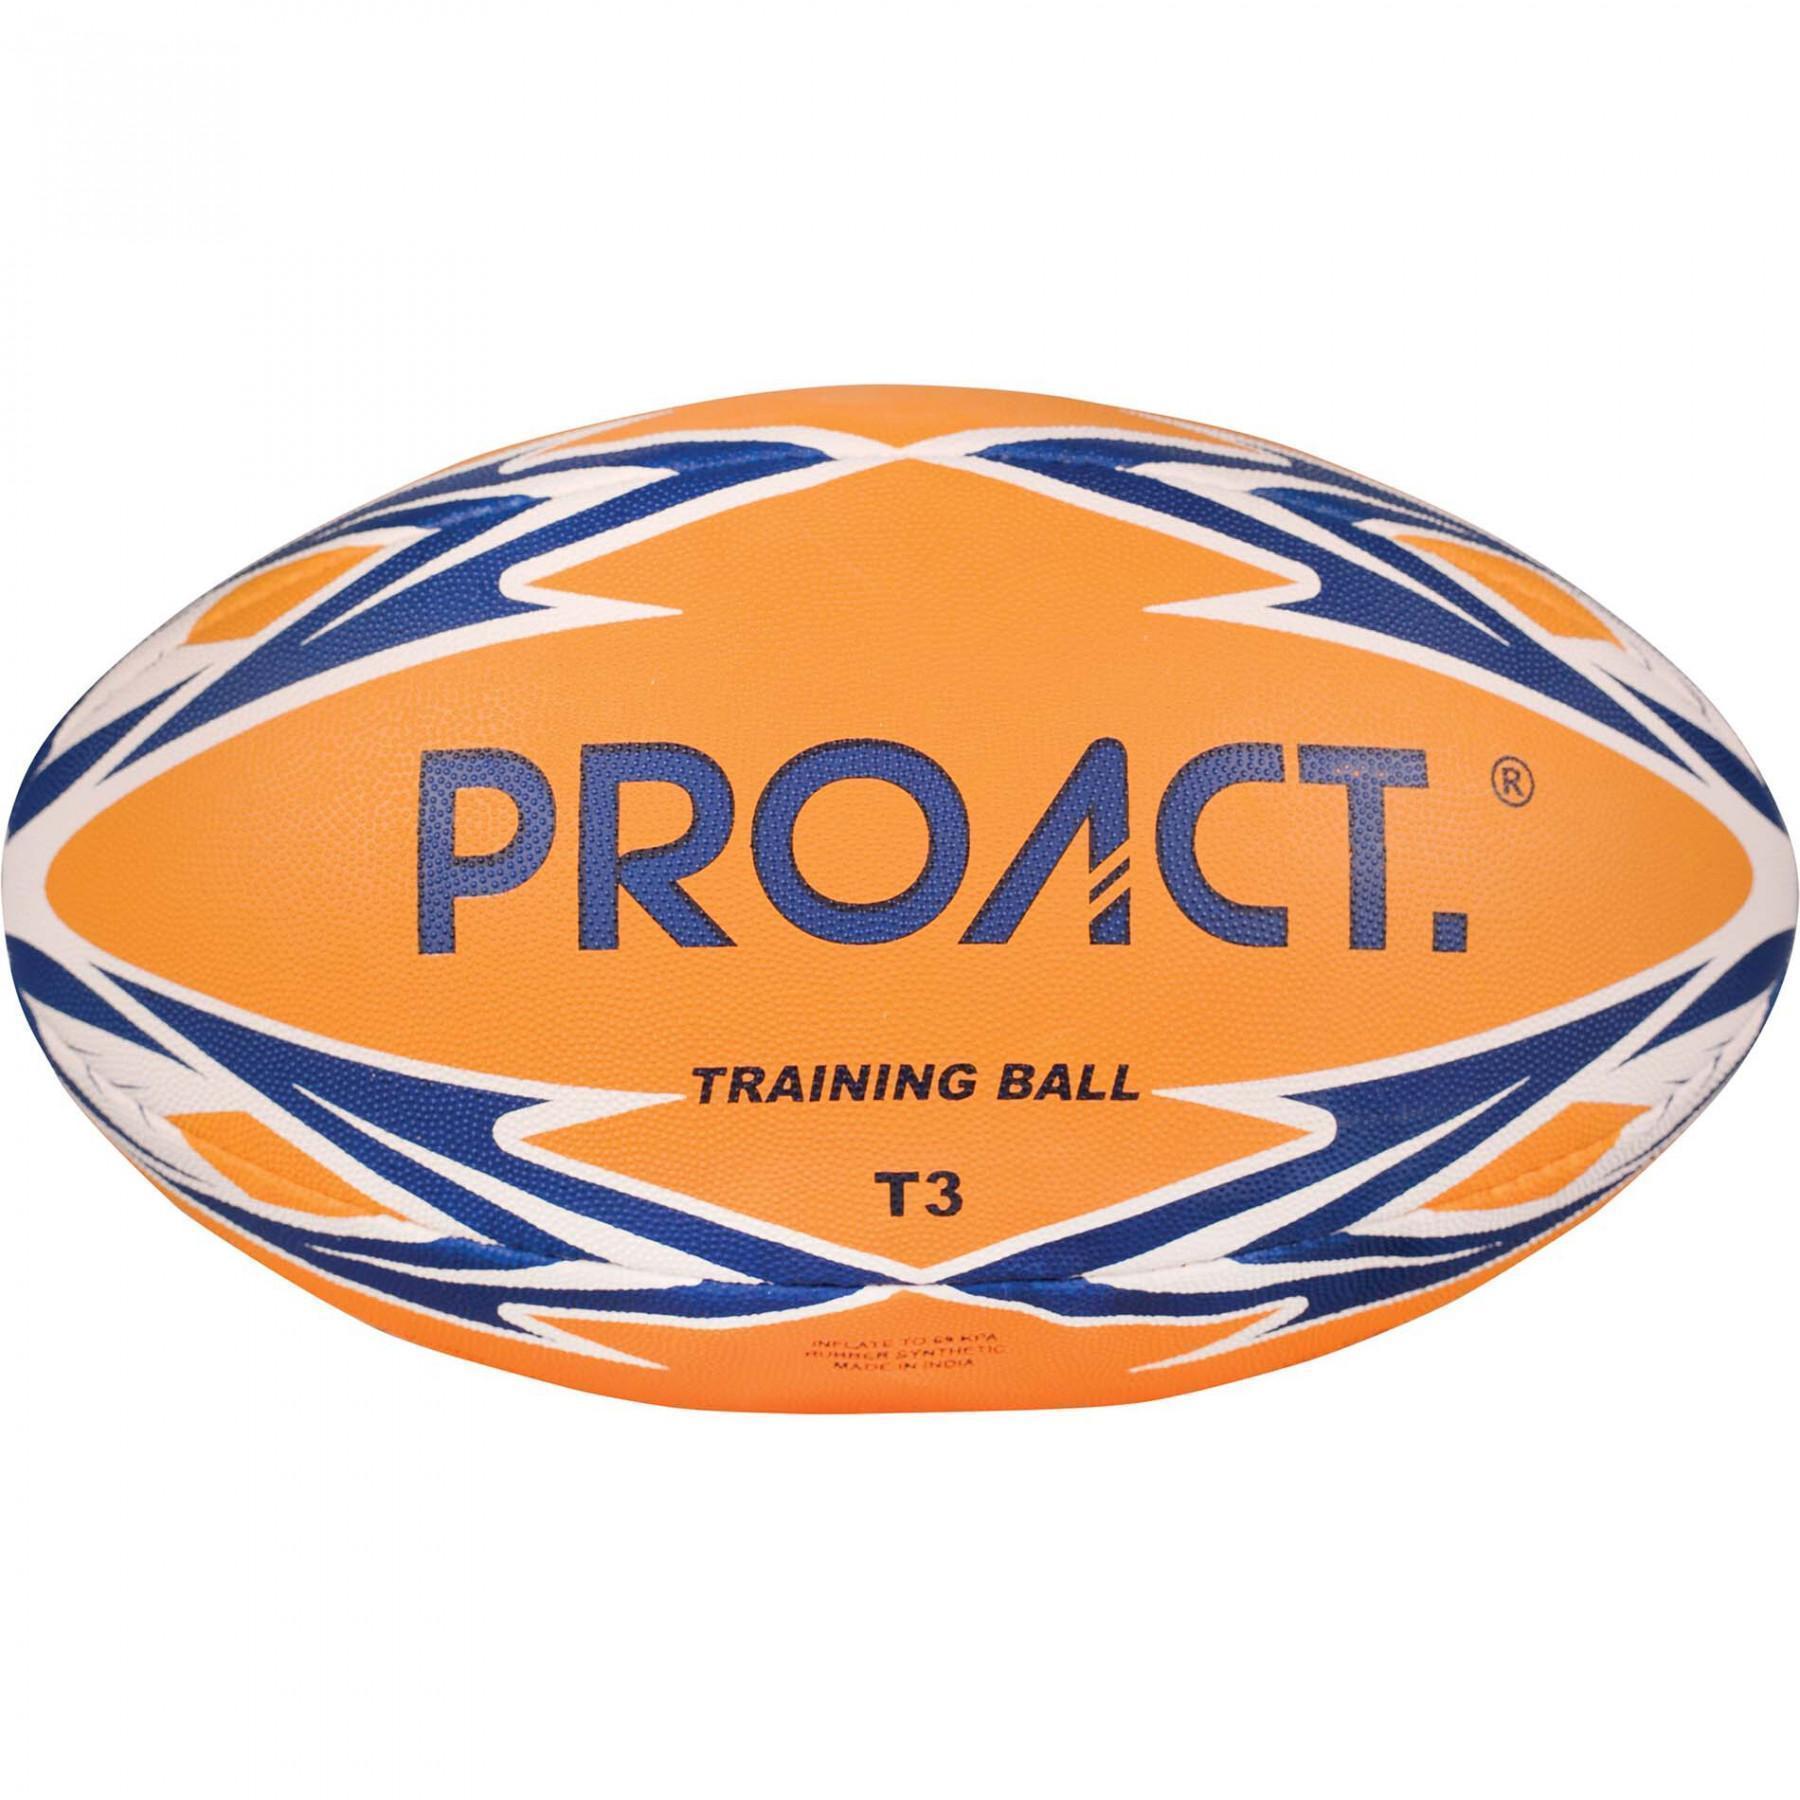 Rugby Ball Proact Challenge